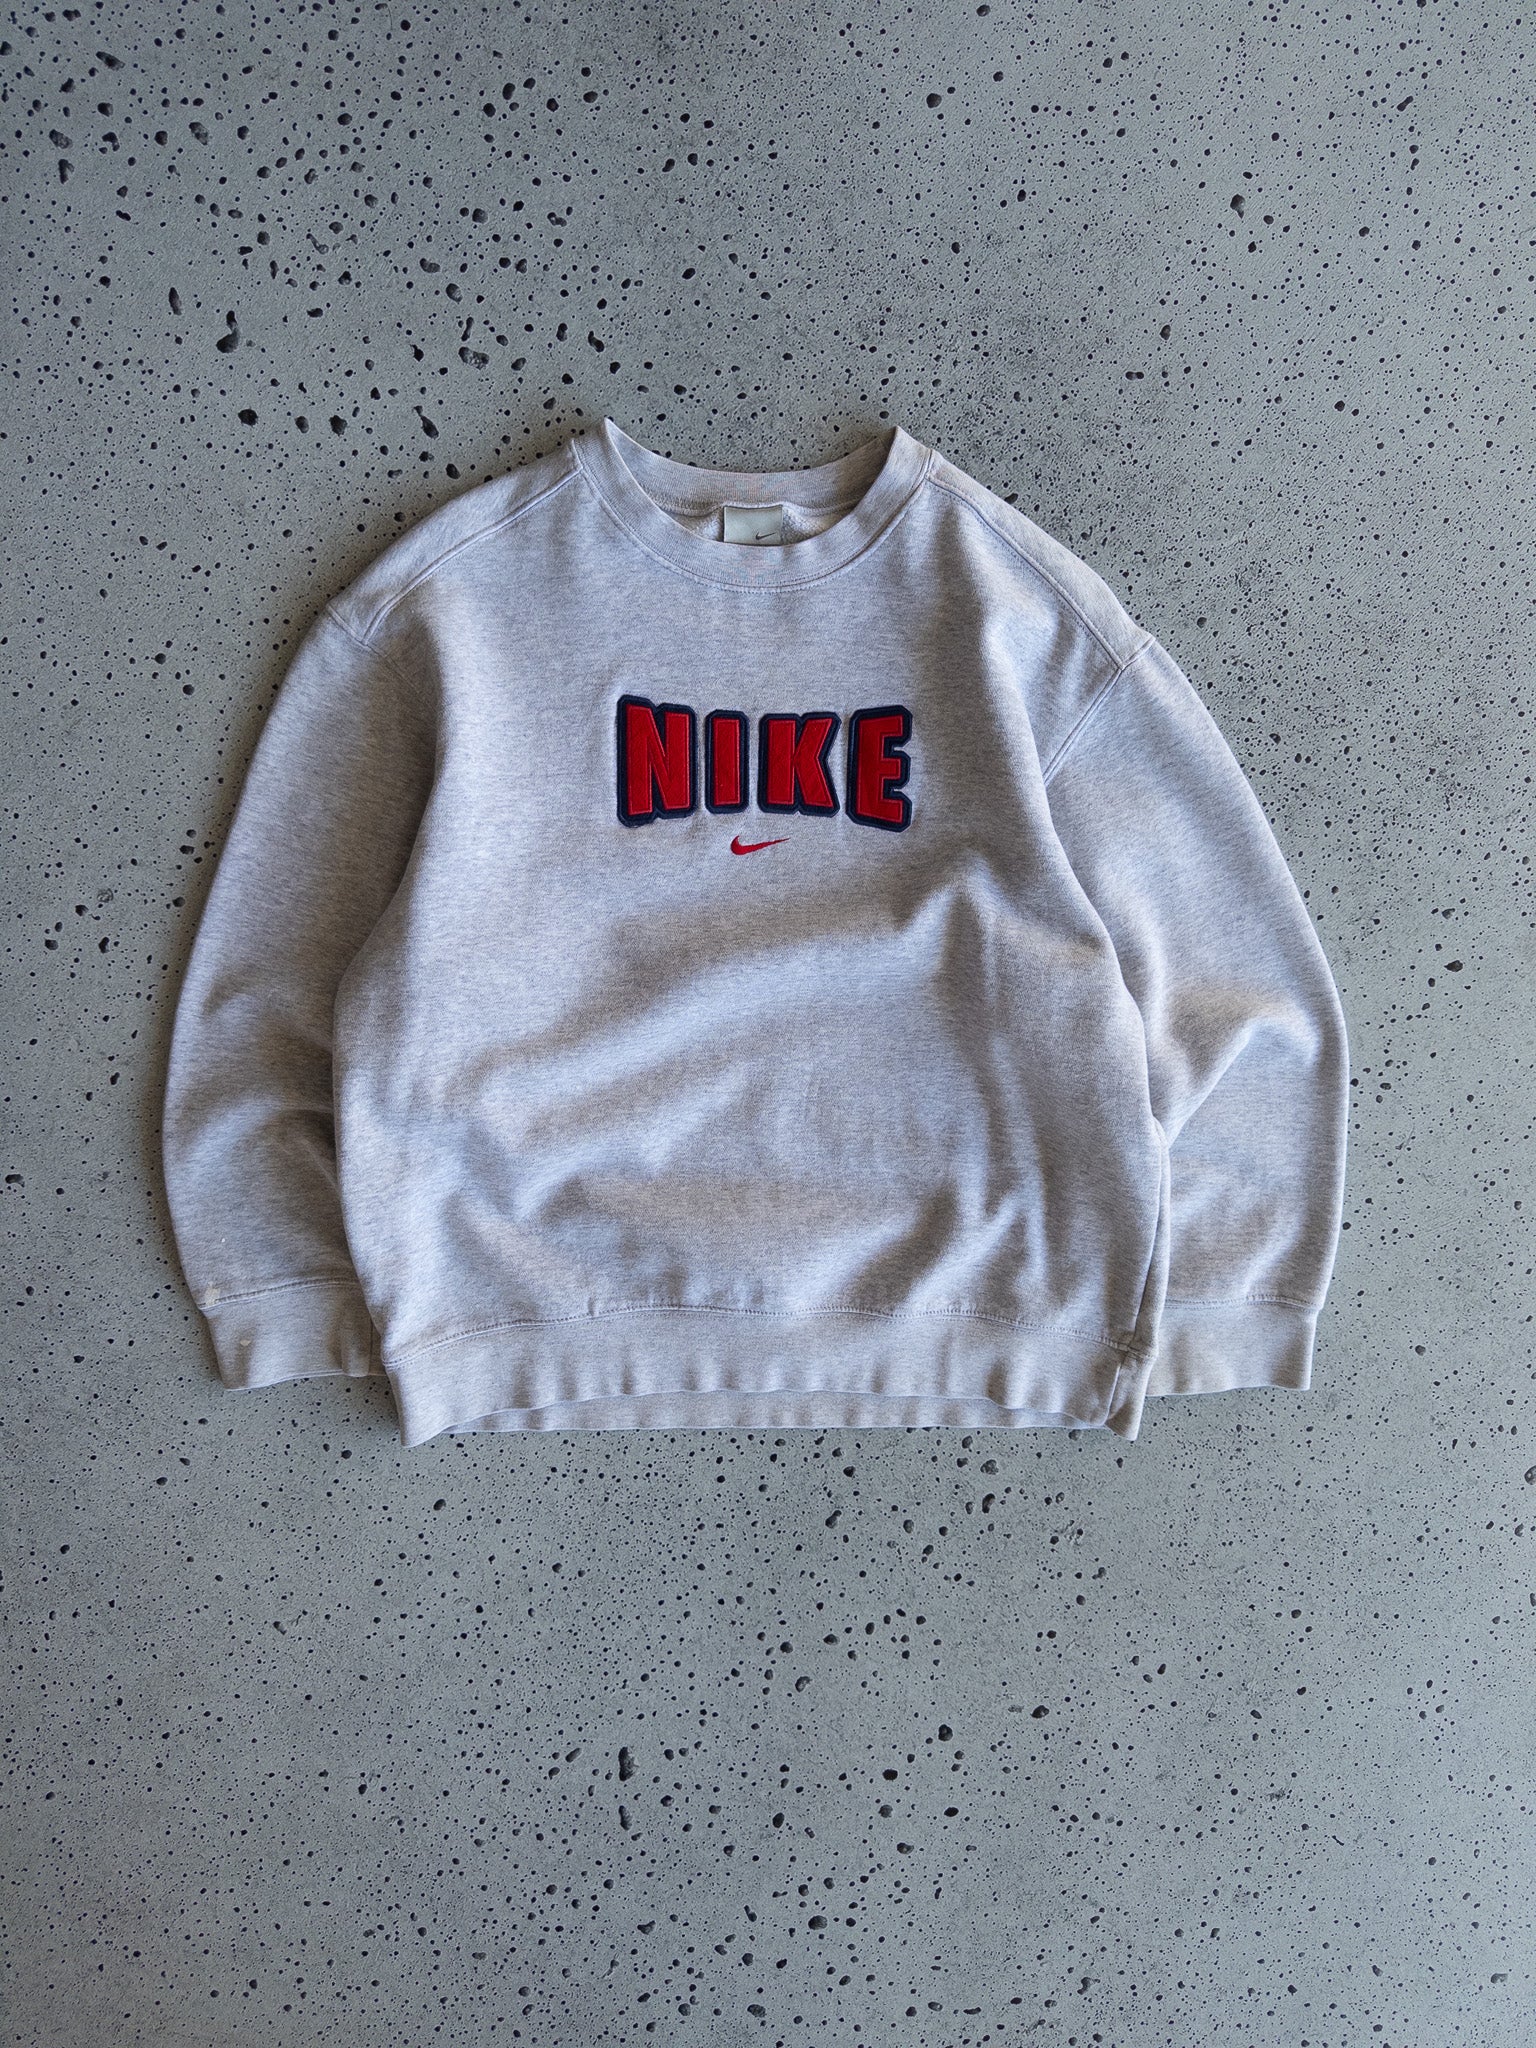 Vintage Nike Sweatshirt (XS)